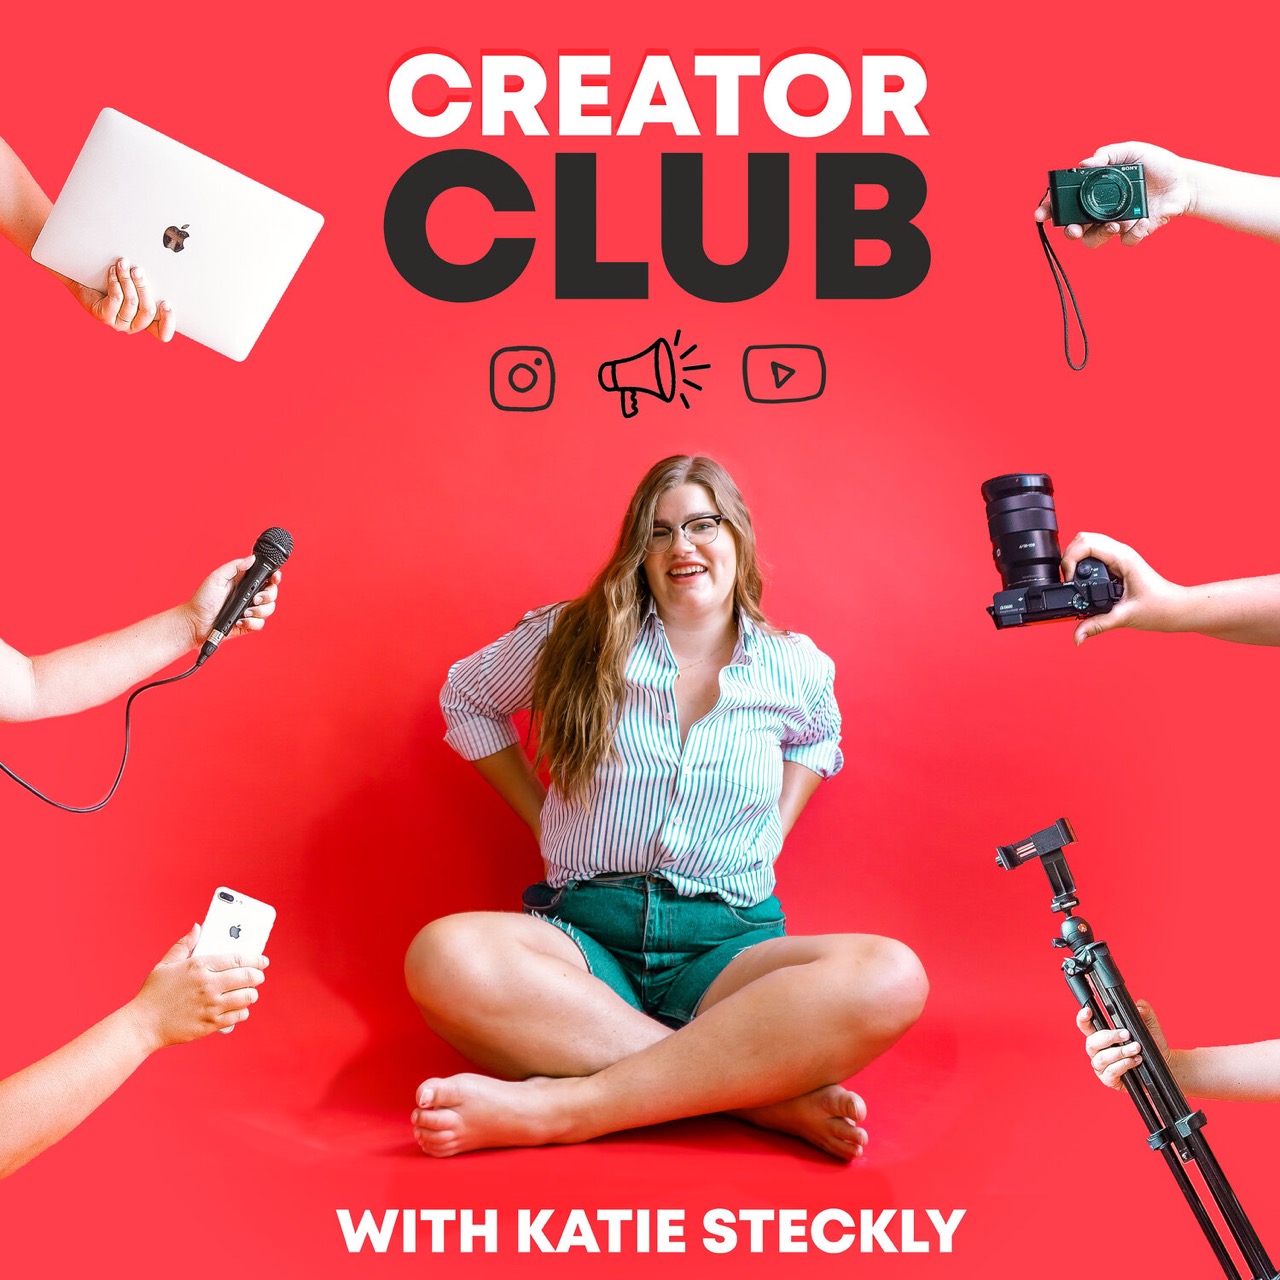 Creators Club. Create Club. Creation Club. Channel here